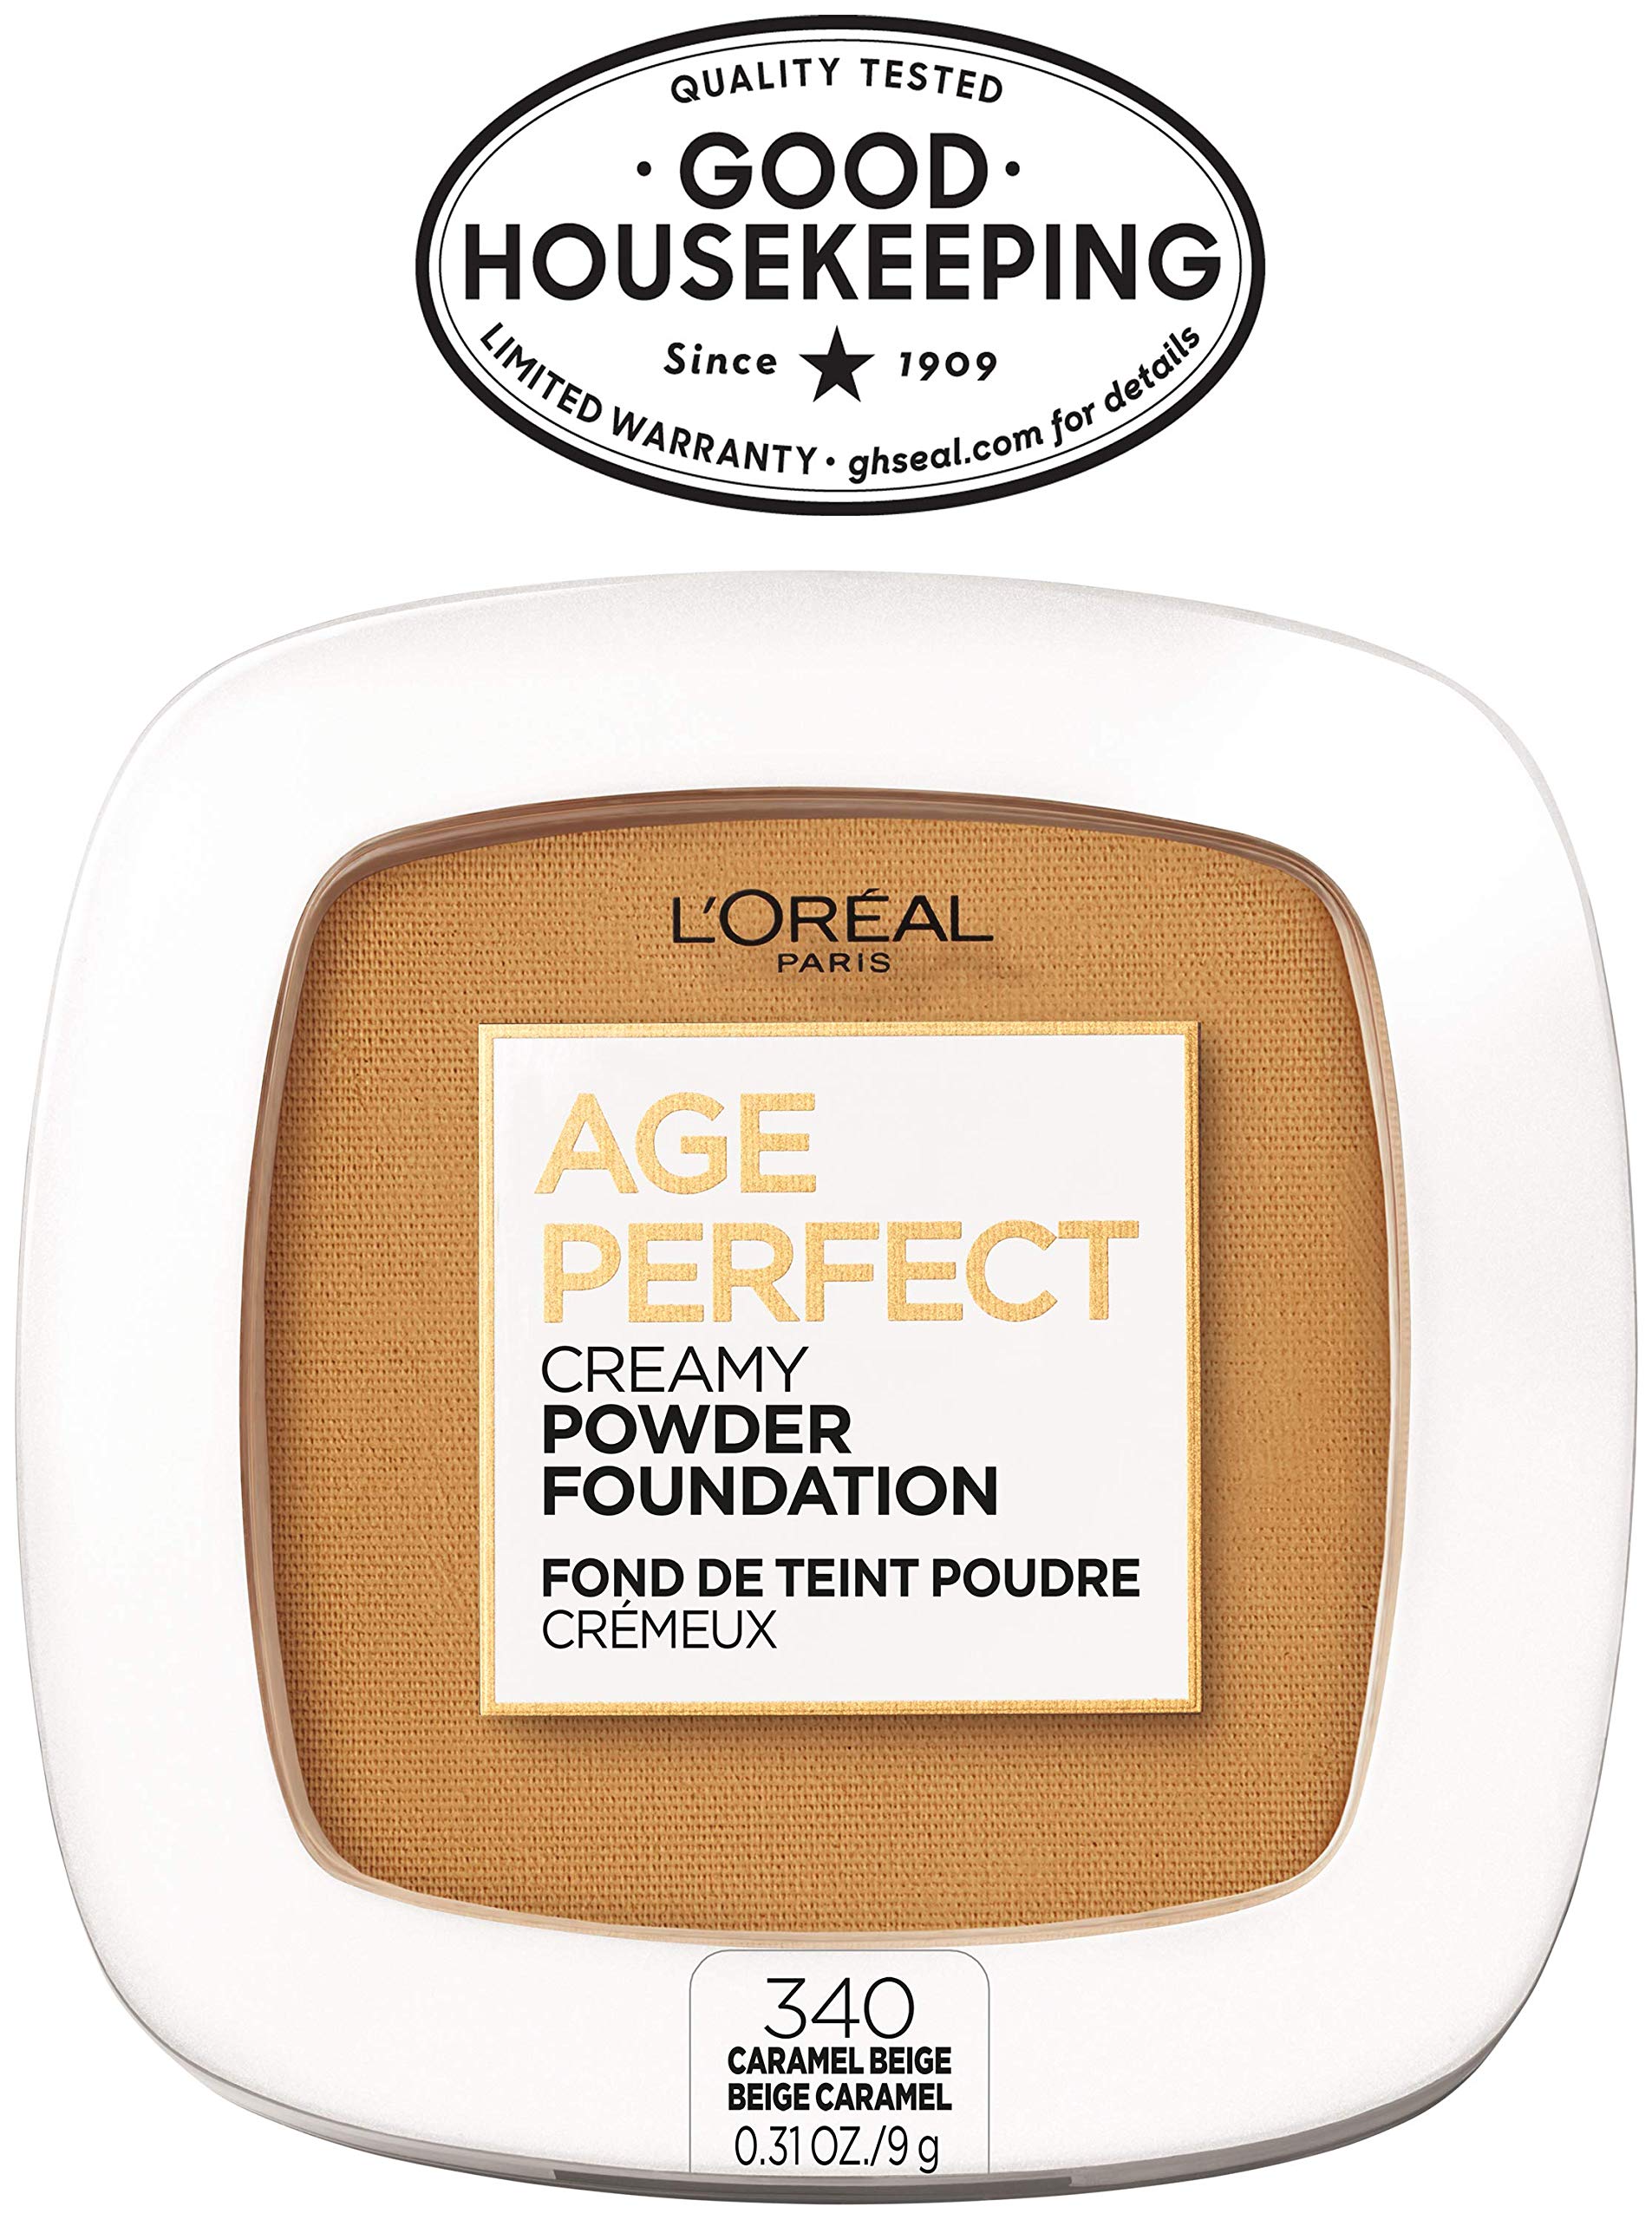 L'Oreal Paris Age Perfect Creamy Powder Foundation Compact, 340 Caramel Beige, 0.31 Ounce